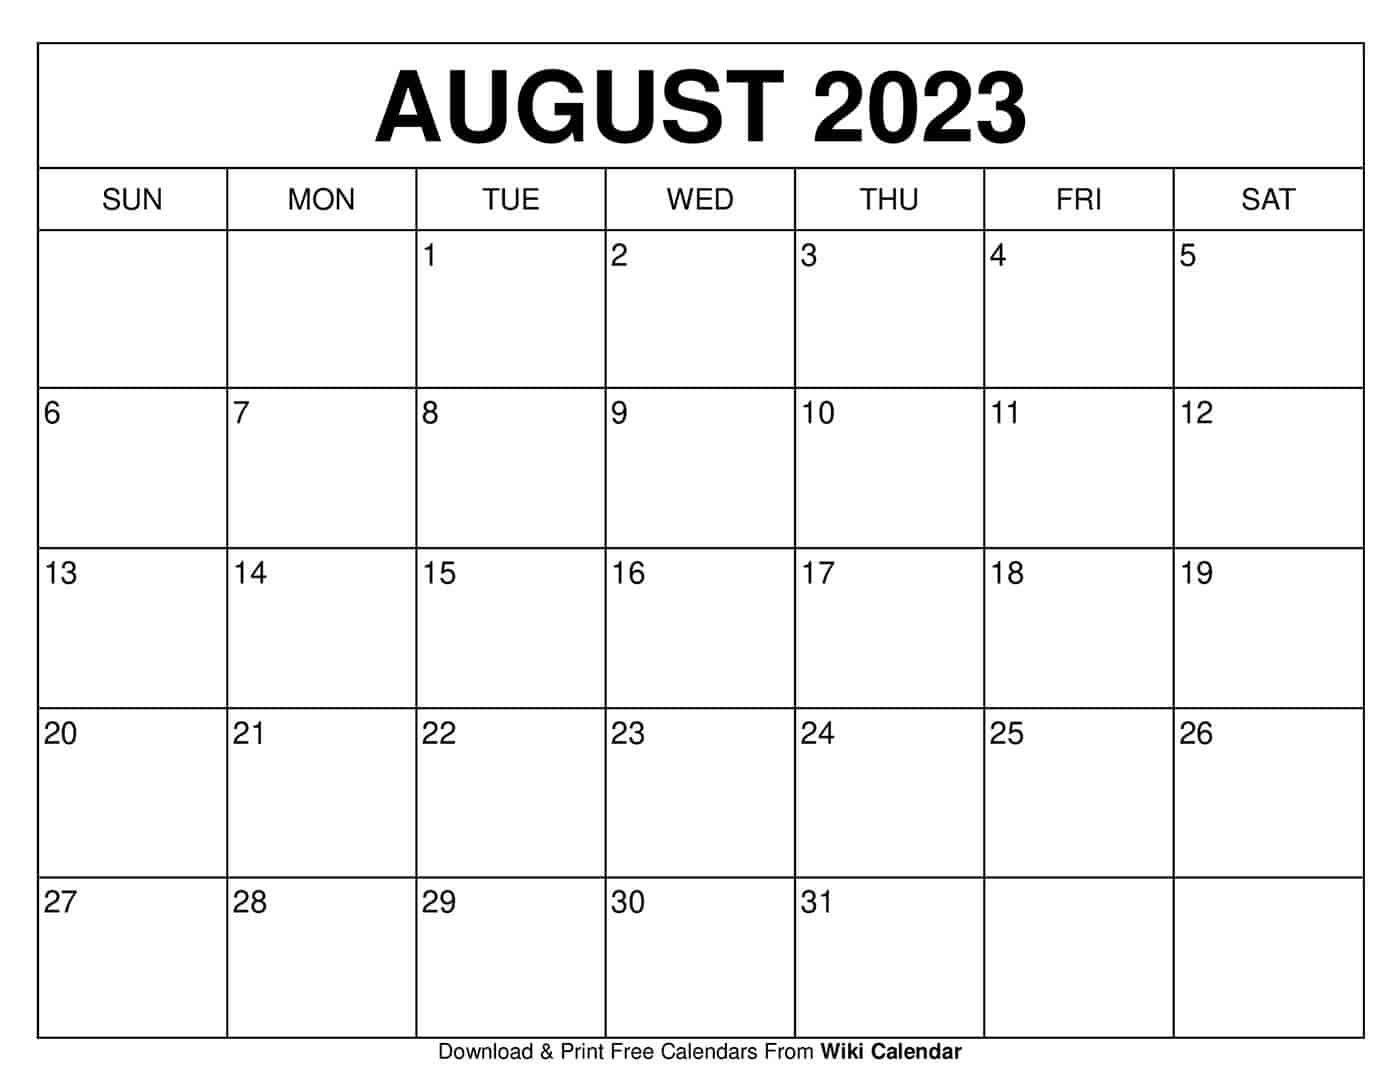 Free Printable August 2023 Calendar Templates With Holidays Wiki Calendar